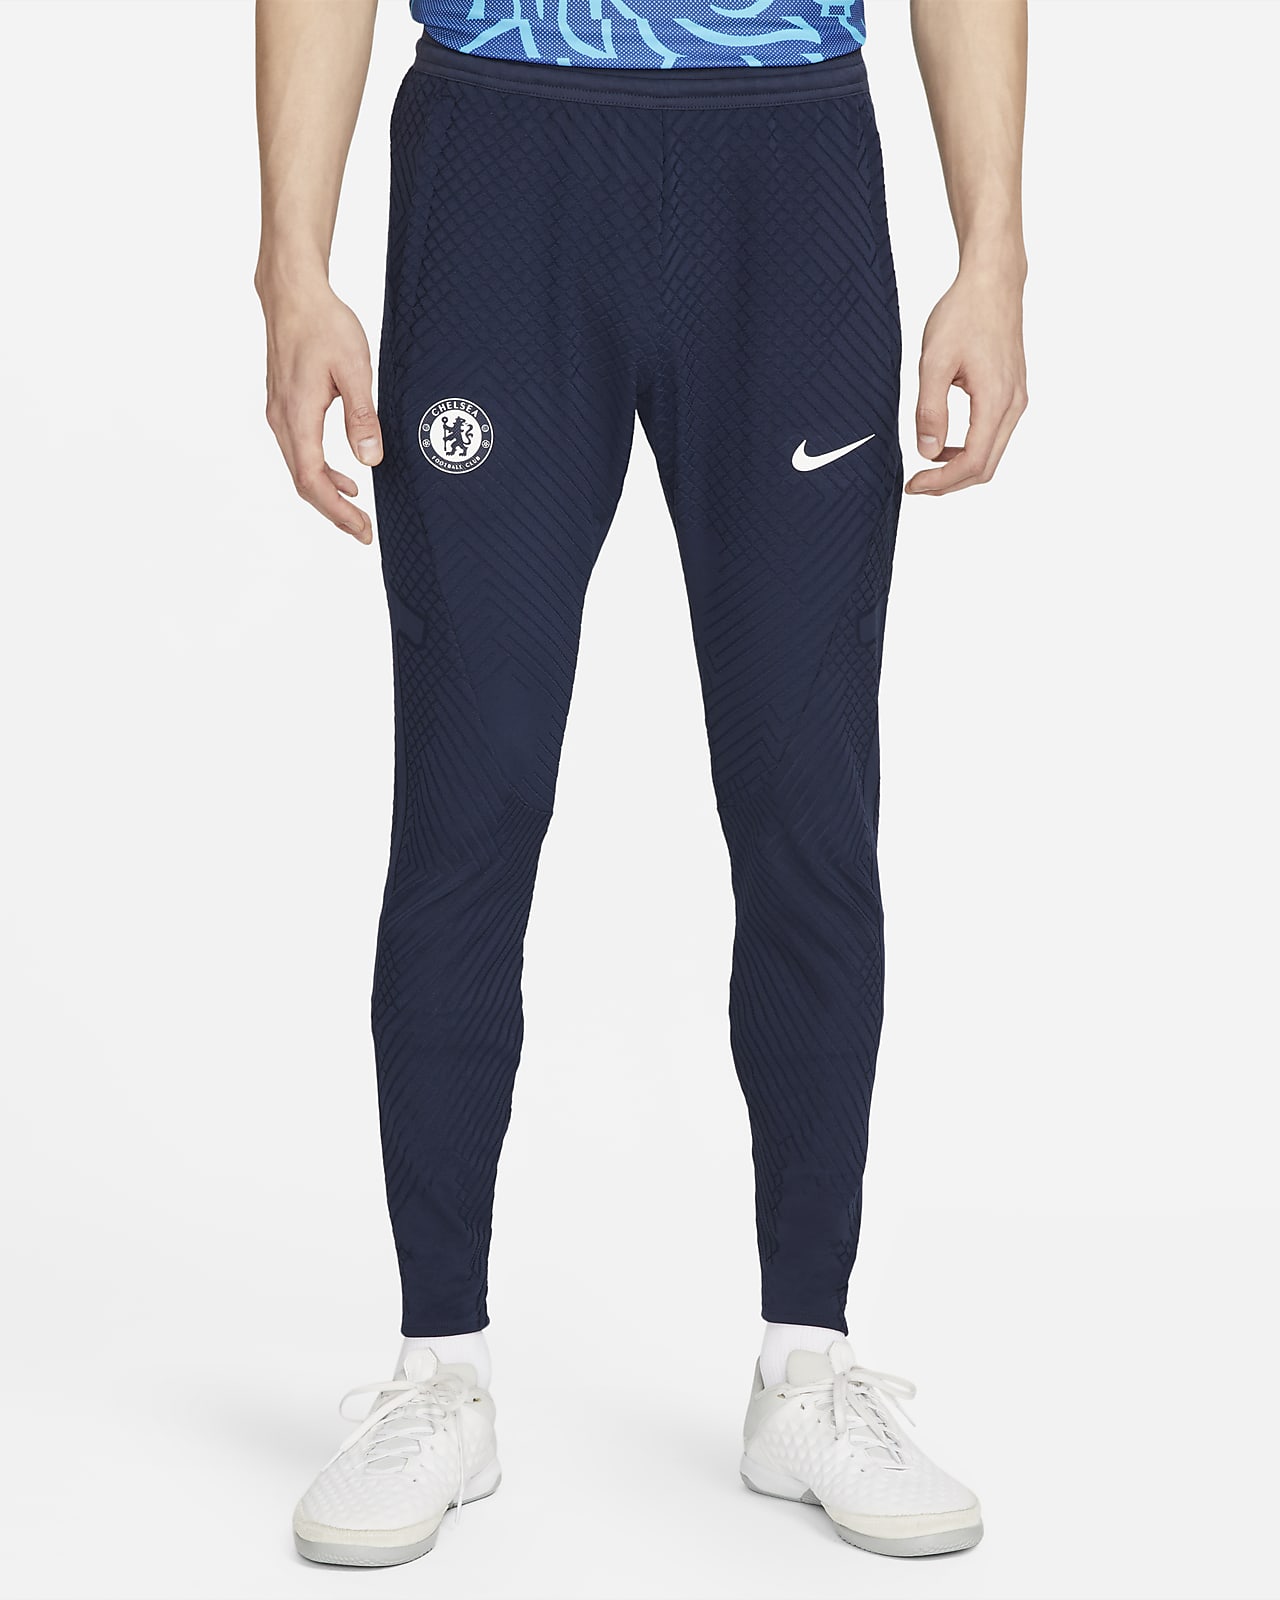 Chelsea F.C. Strike Elite Men's Nike Dri-FIT ADV Football Pants